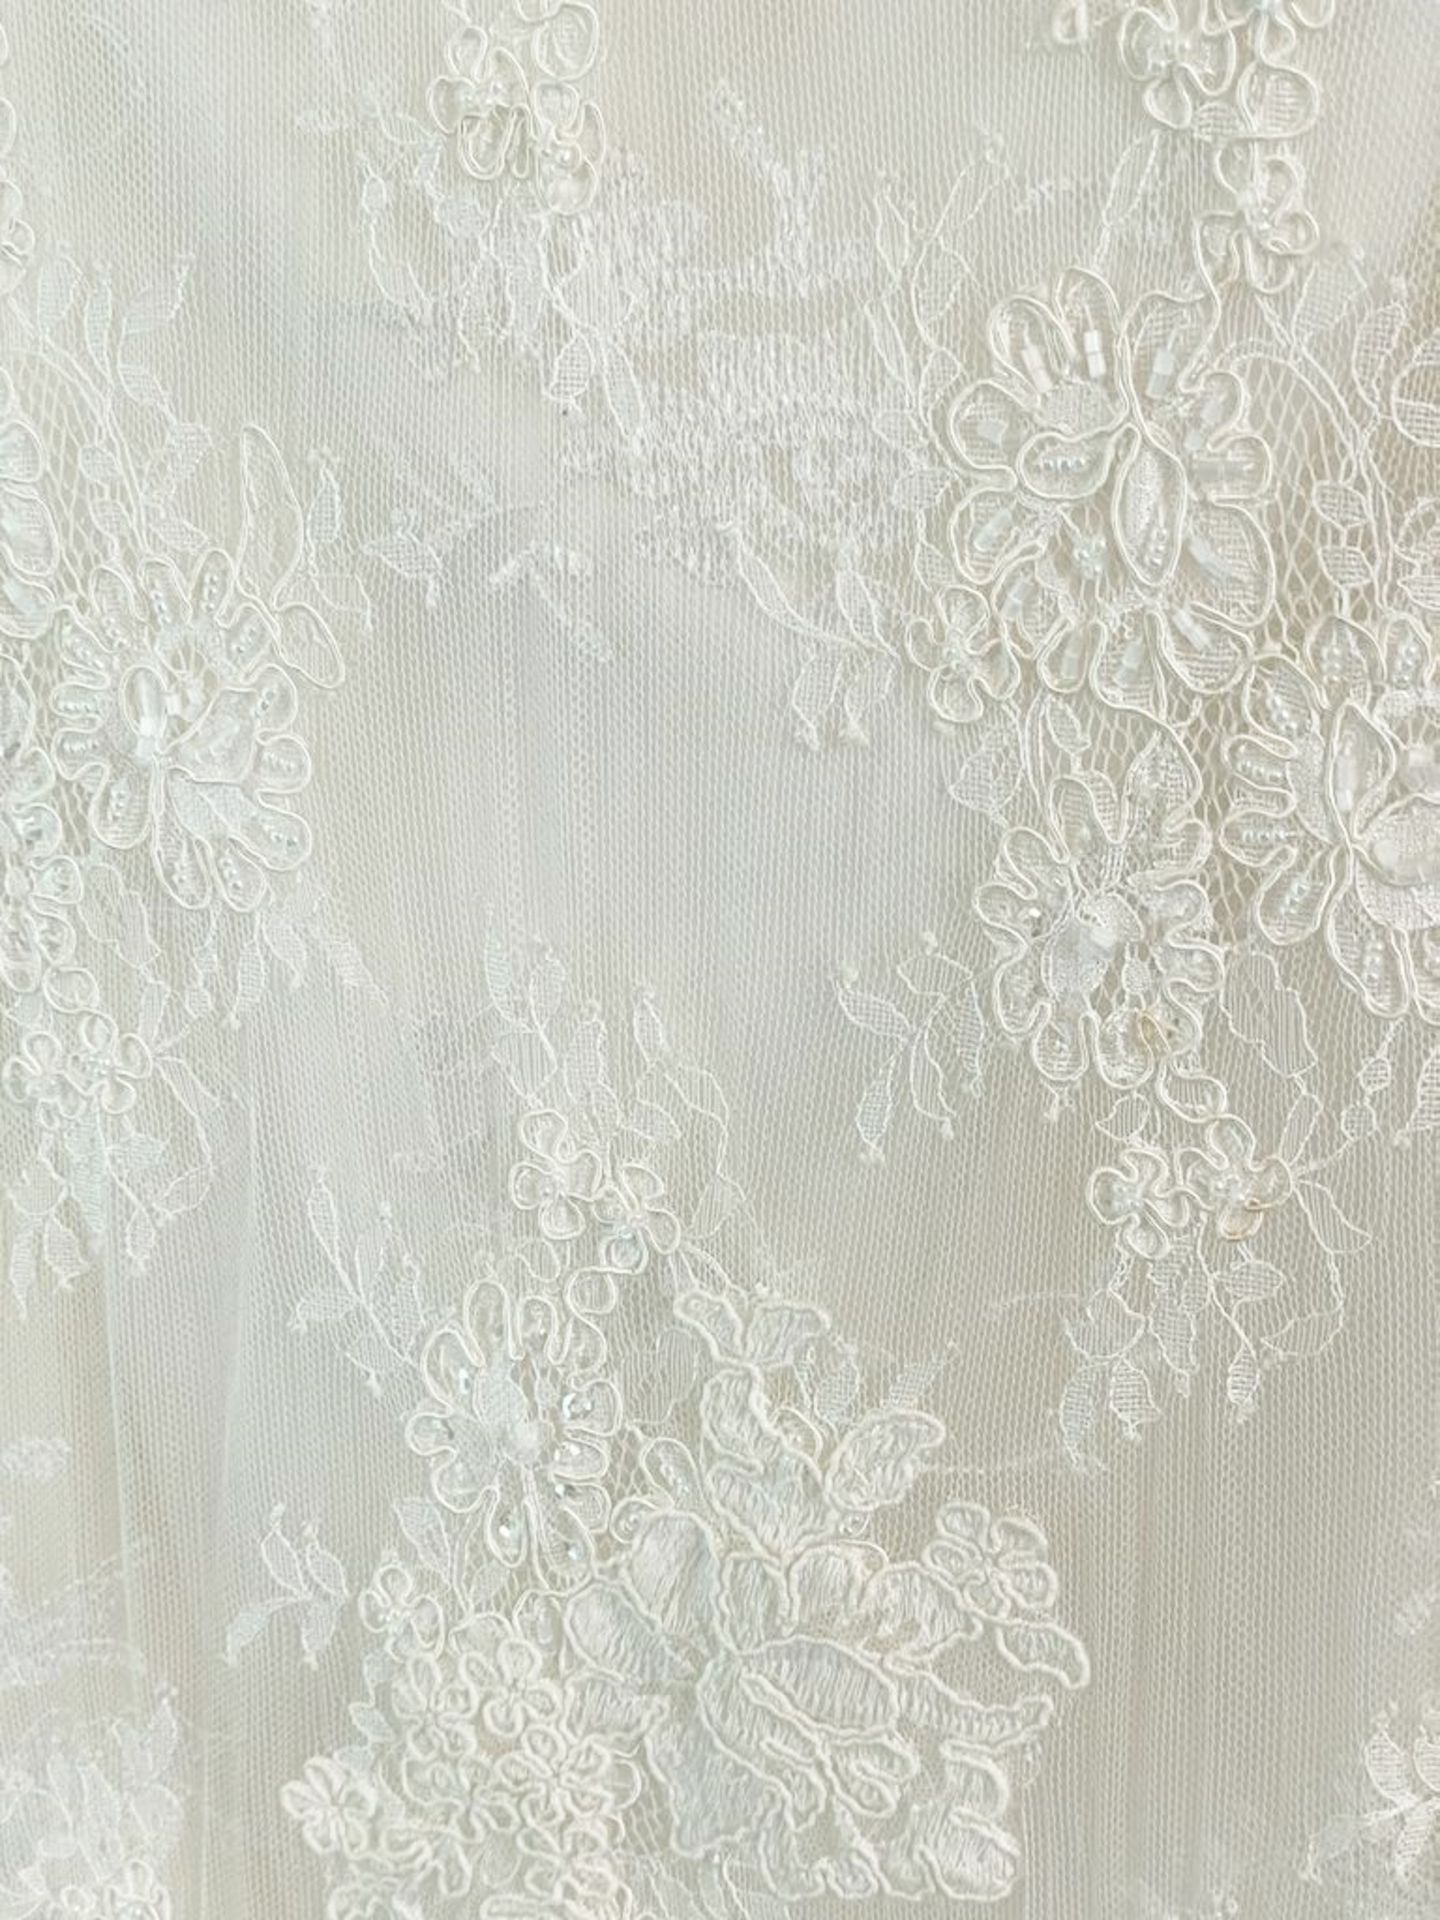 1 x LUSAN MANDONGUS 'Iona' Designer Wedding Dress Bridal Gown - Size: UK 12 - Original RRP £1,950 - Image 5 of 12